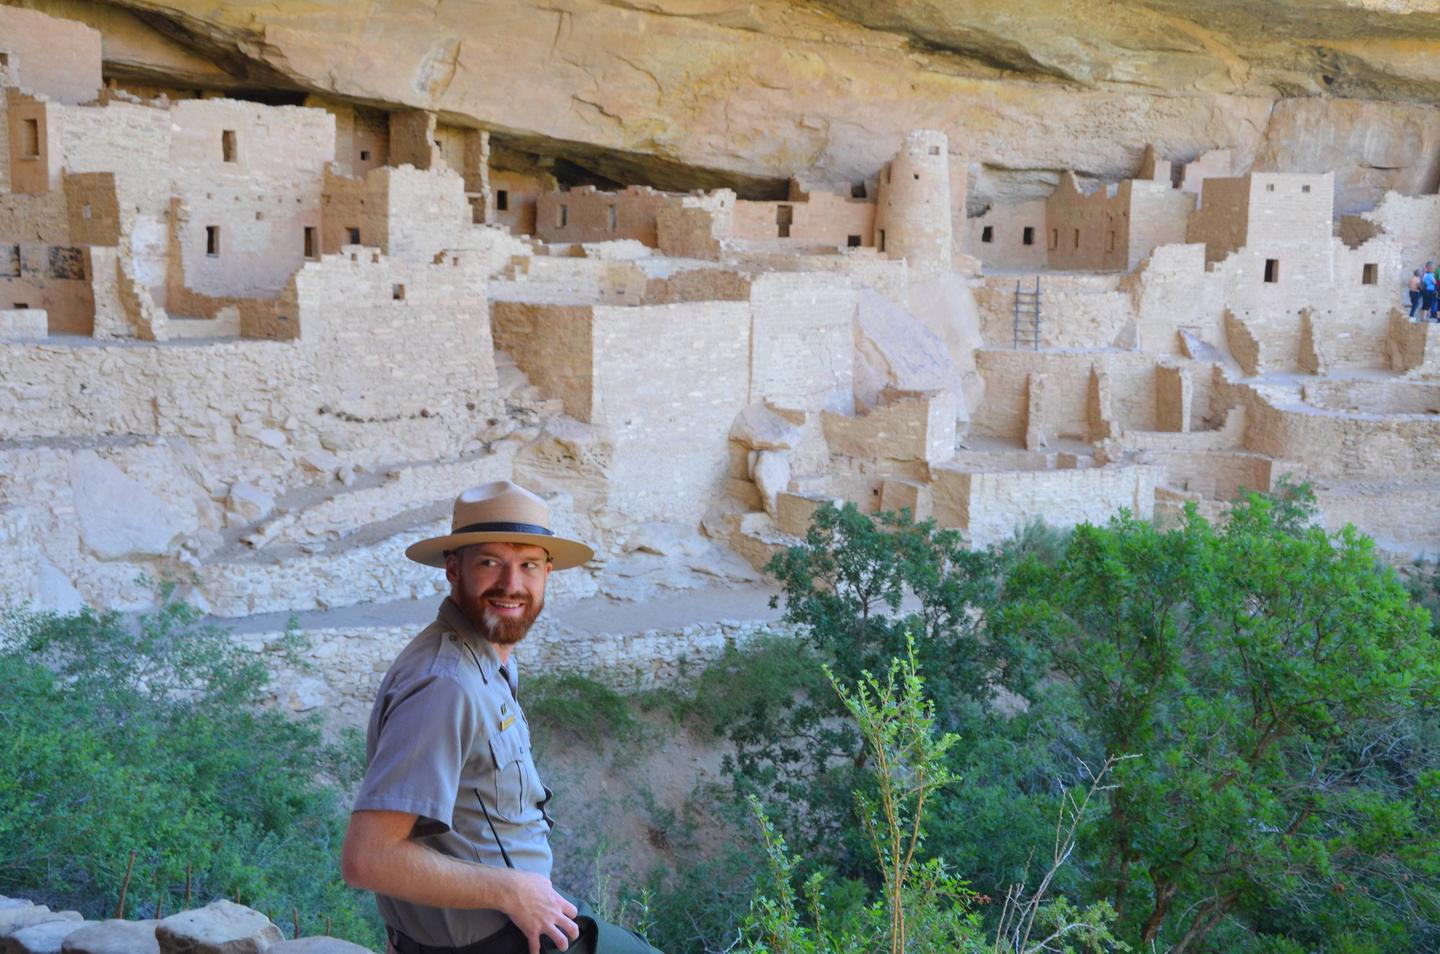 NPS Park Ranger Describing the Ancient Structures 